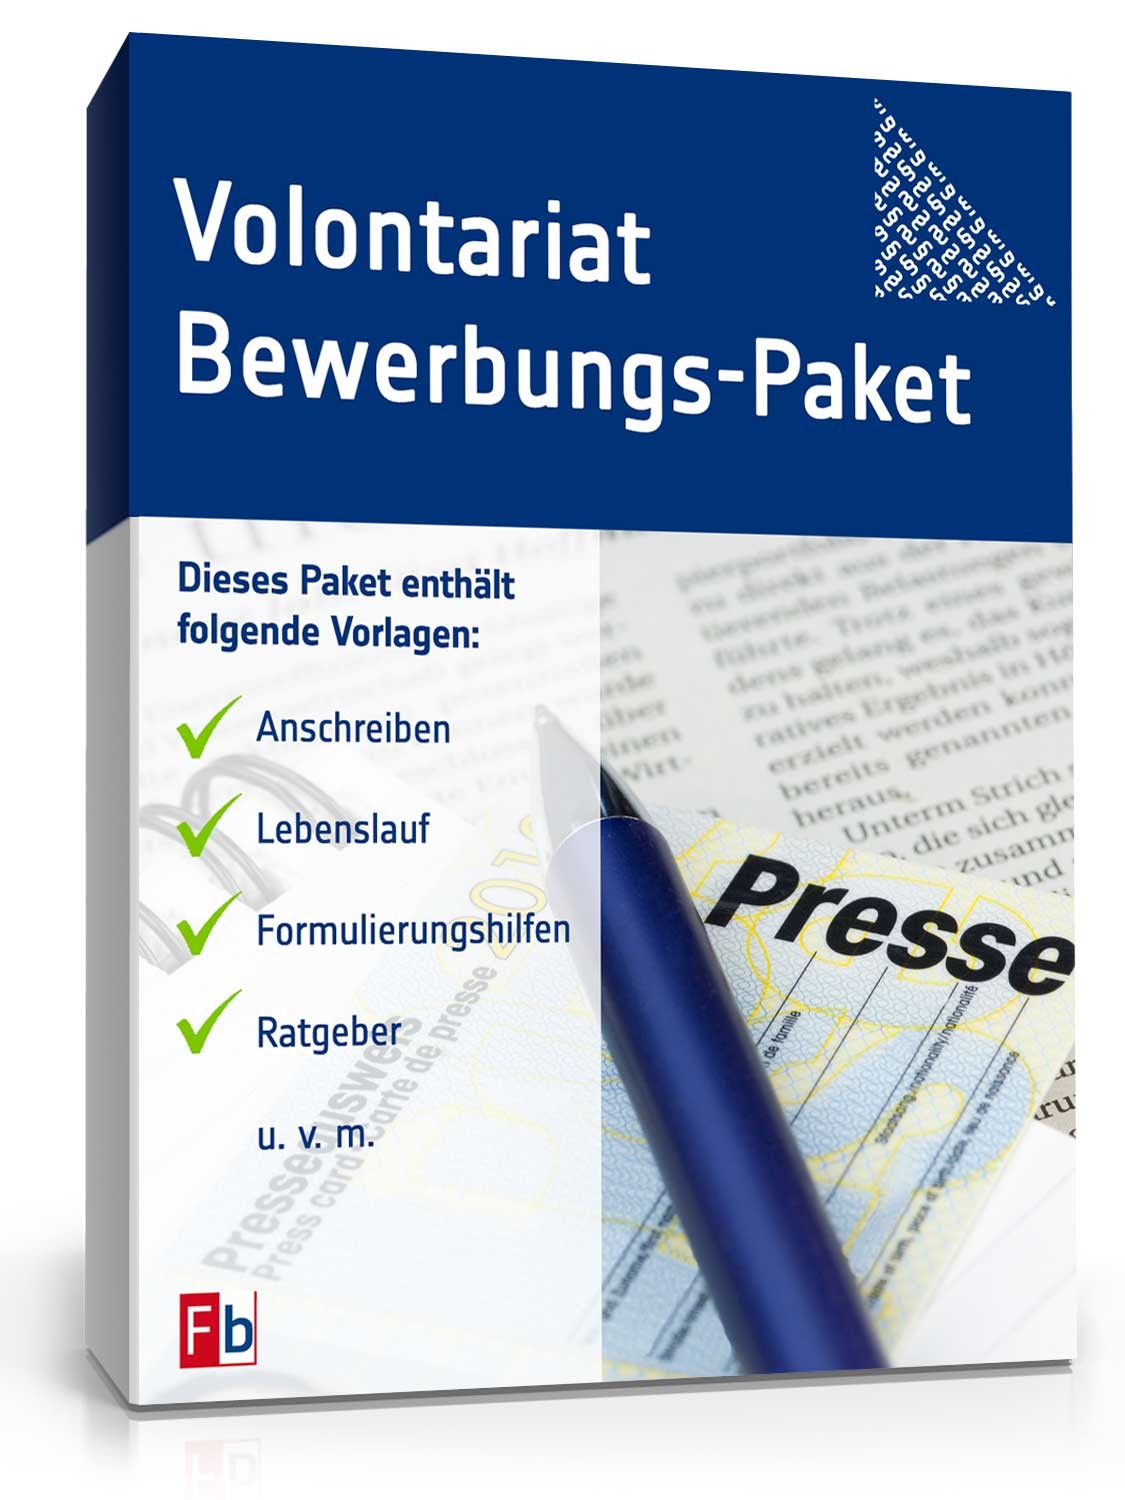 Hauptbild des Produkts: Bewerbungs-Paket Volontariat